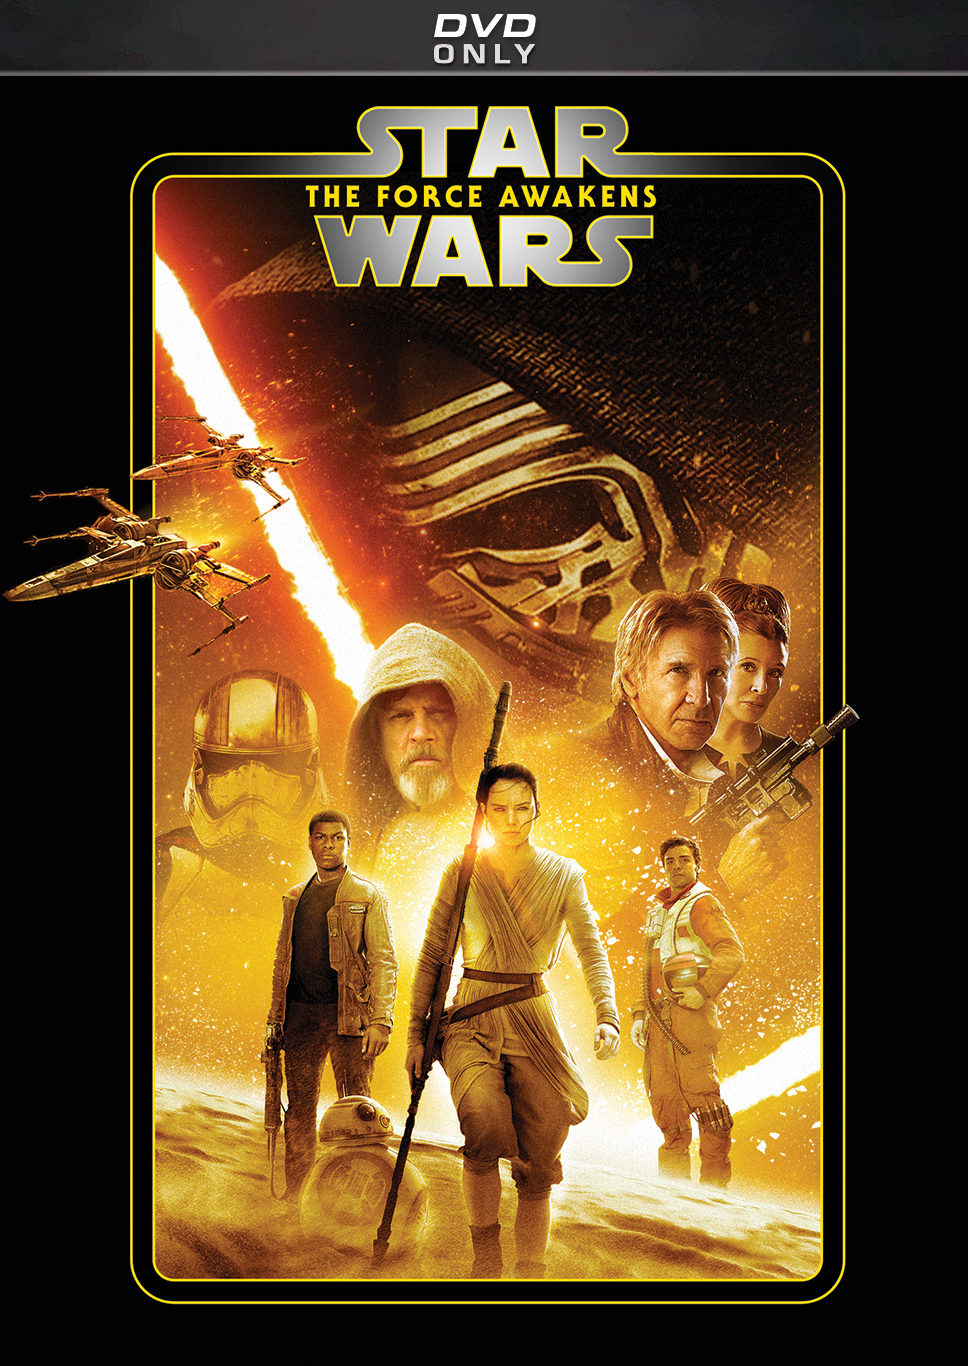 Chewbacca Star Wars The Force Awakens 2015 